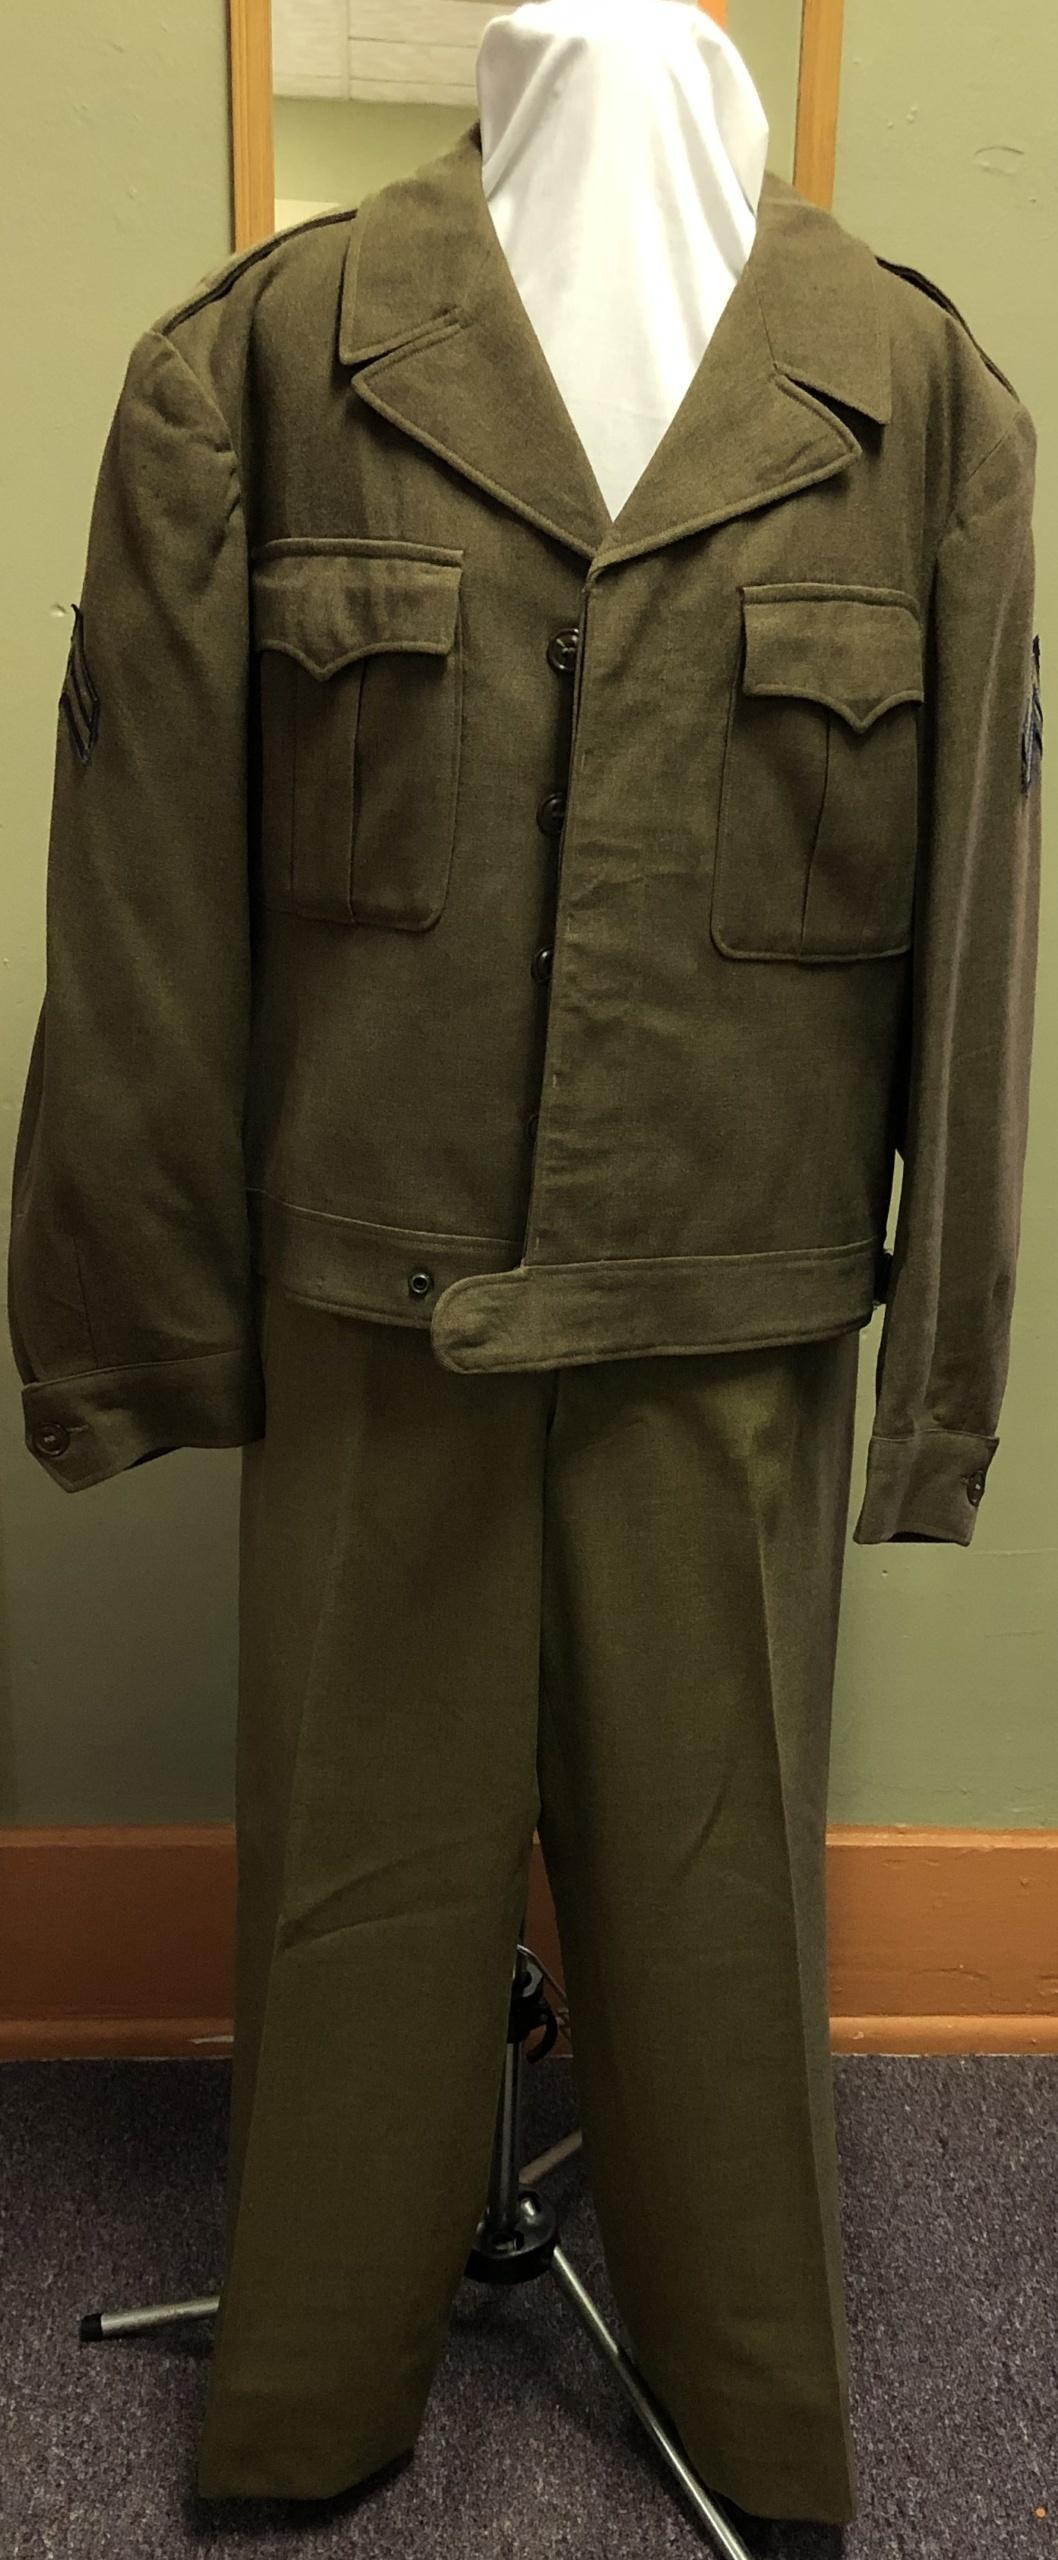 Olive Drab Uniform | museosdelima.com